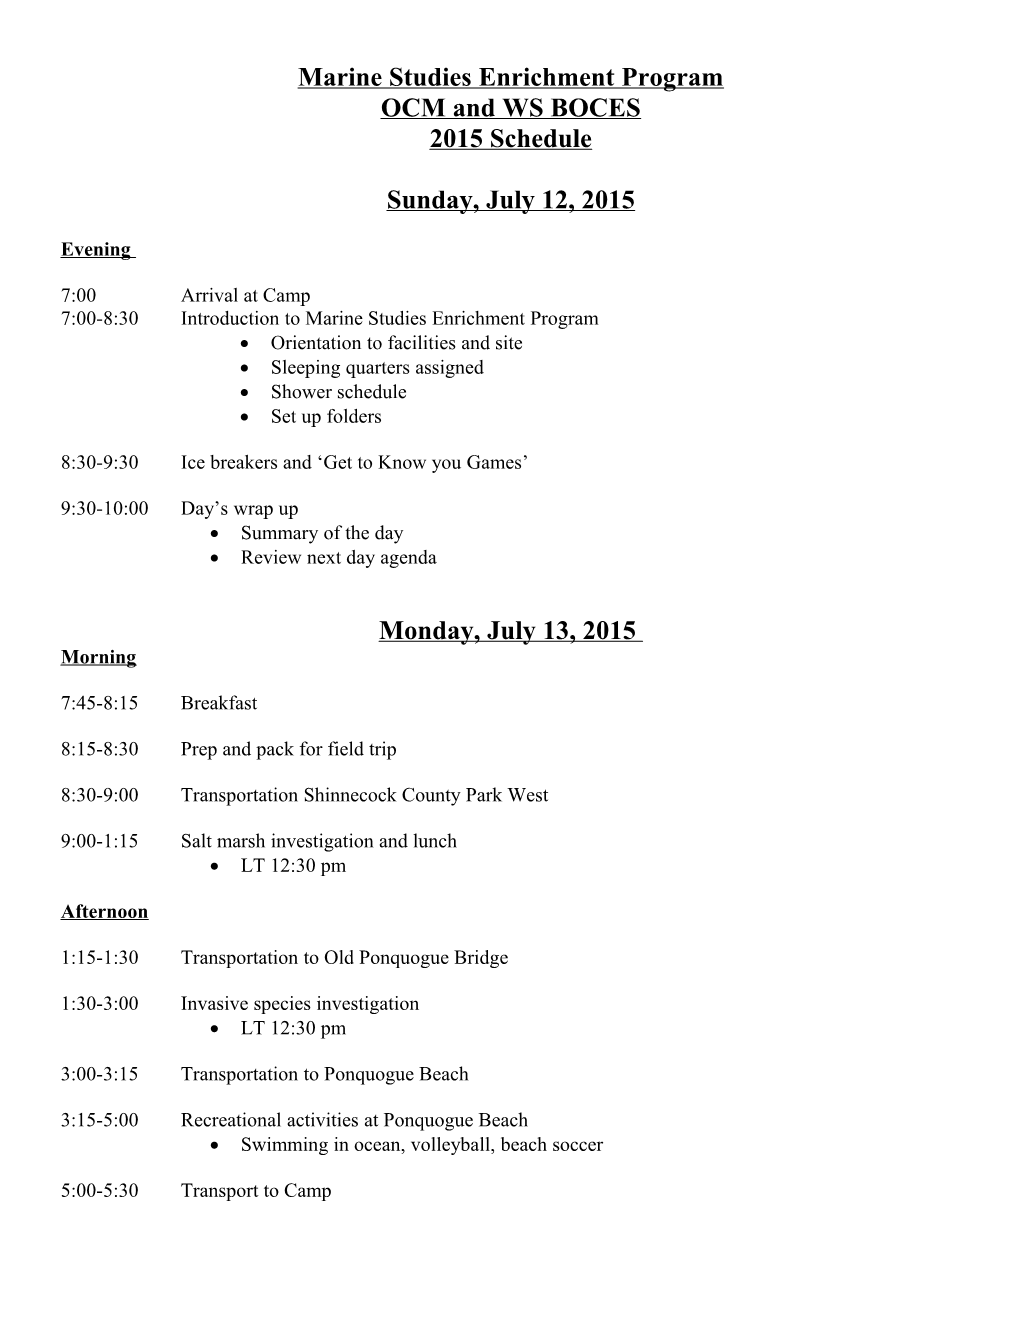 Marine Studies Enrichment Program, OCM, July 13-July 18, 2014